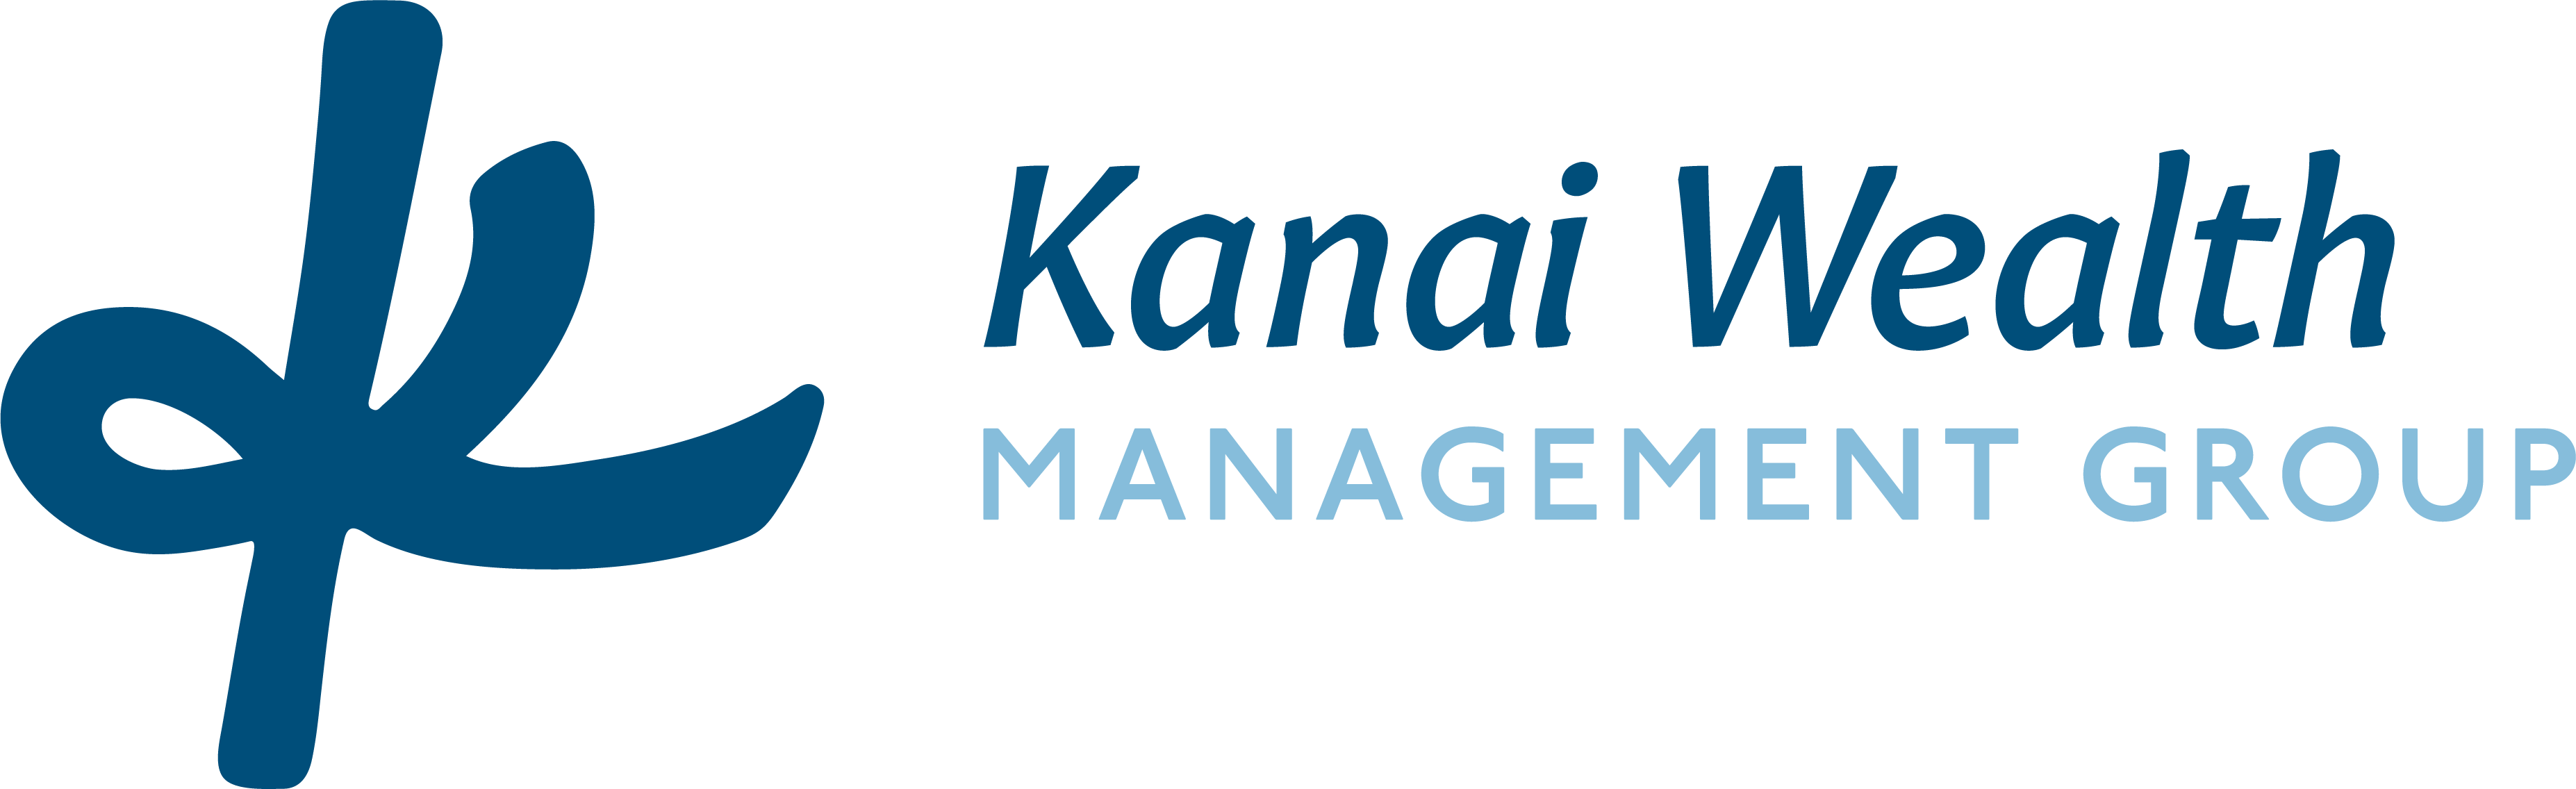 Kanai Wealth Management Group